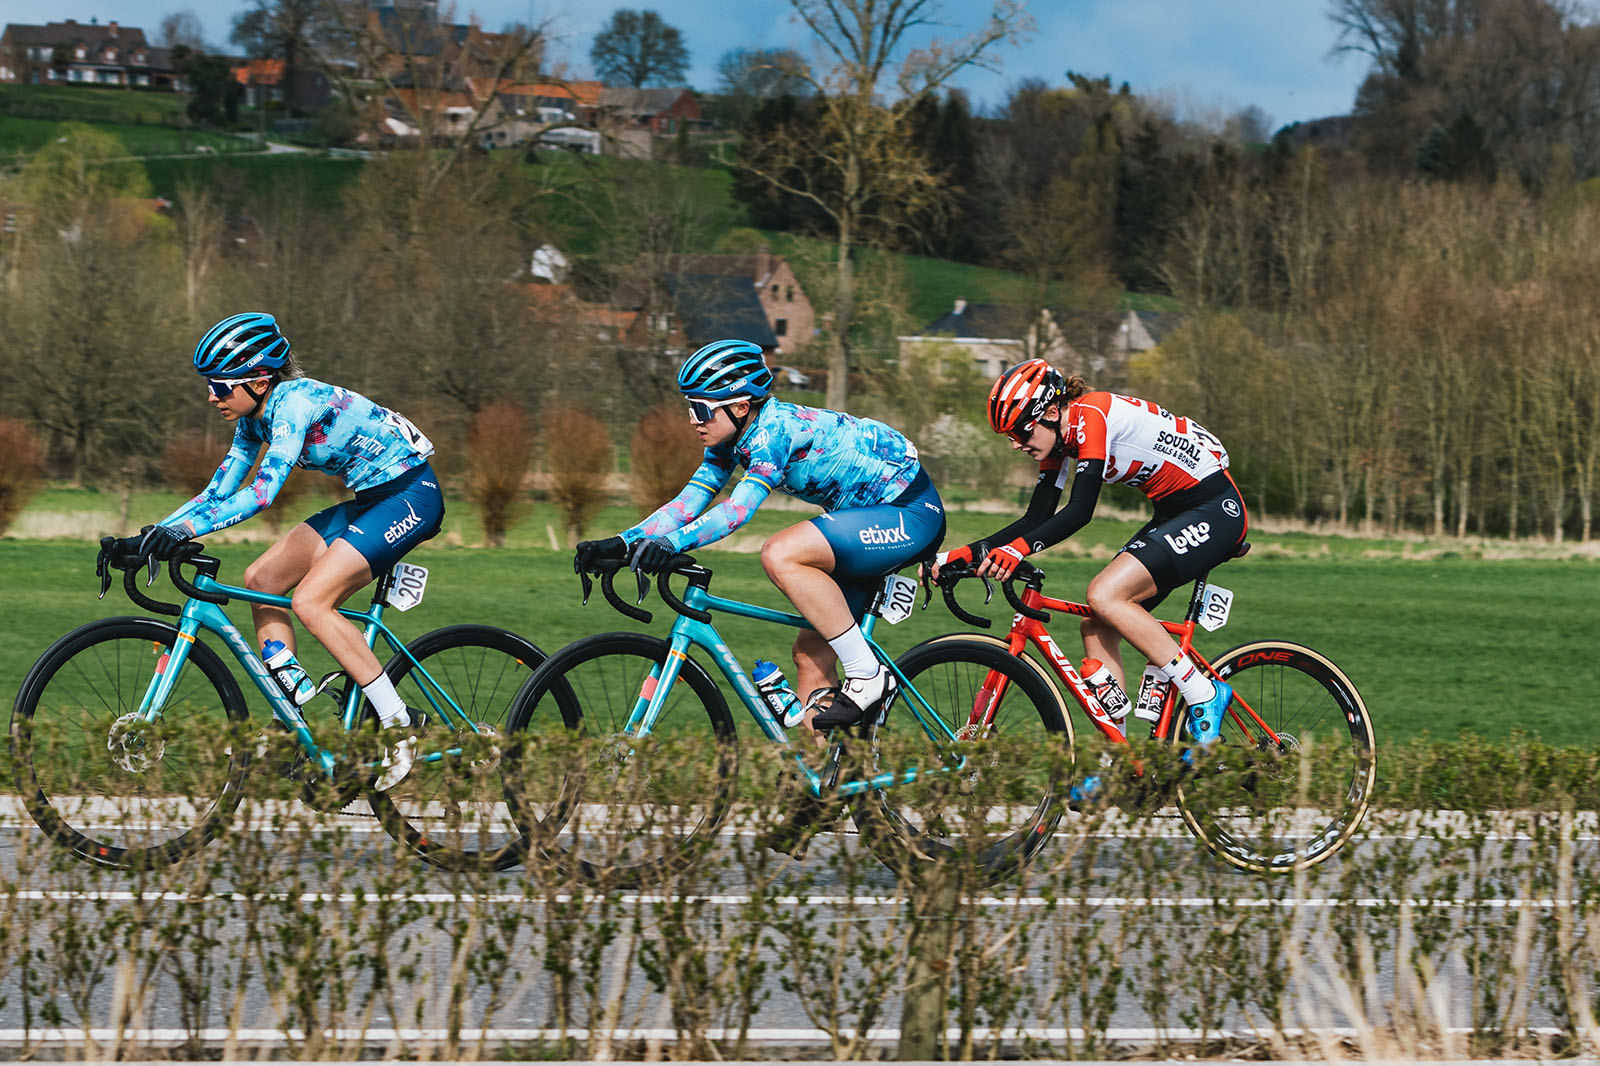 Massi-Tactic women's UCI team at the tour of Flanders in Oudenaarde